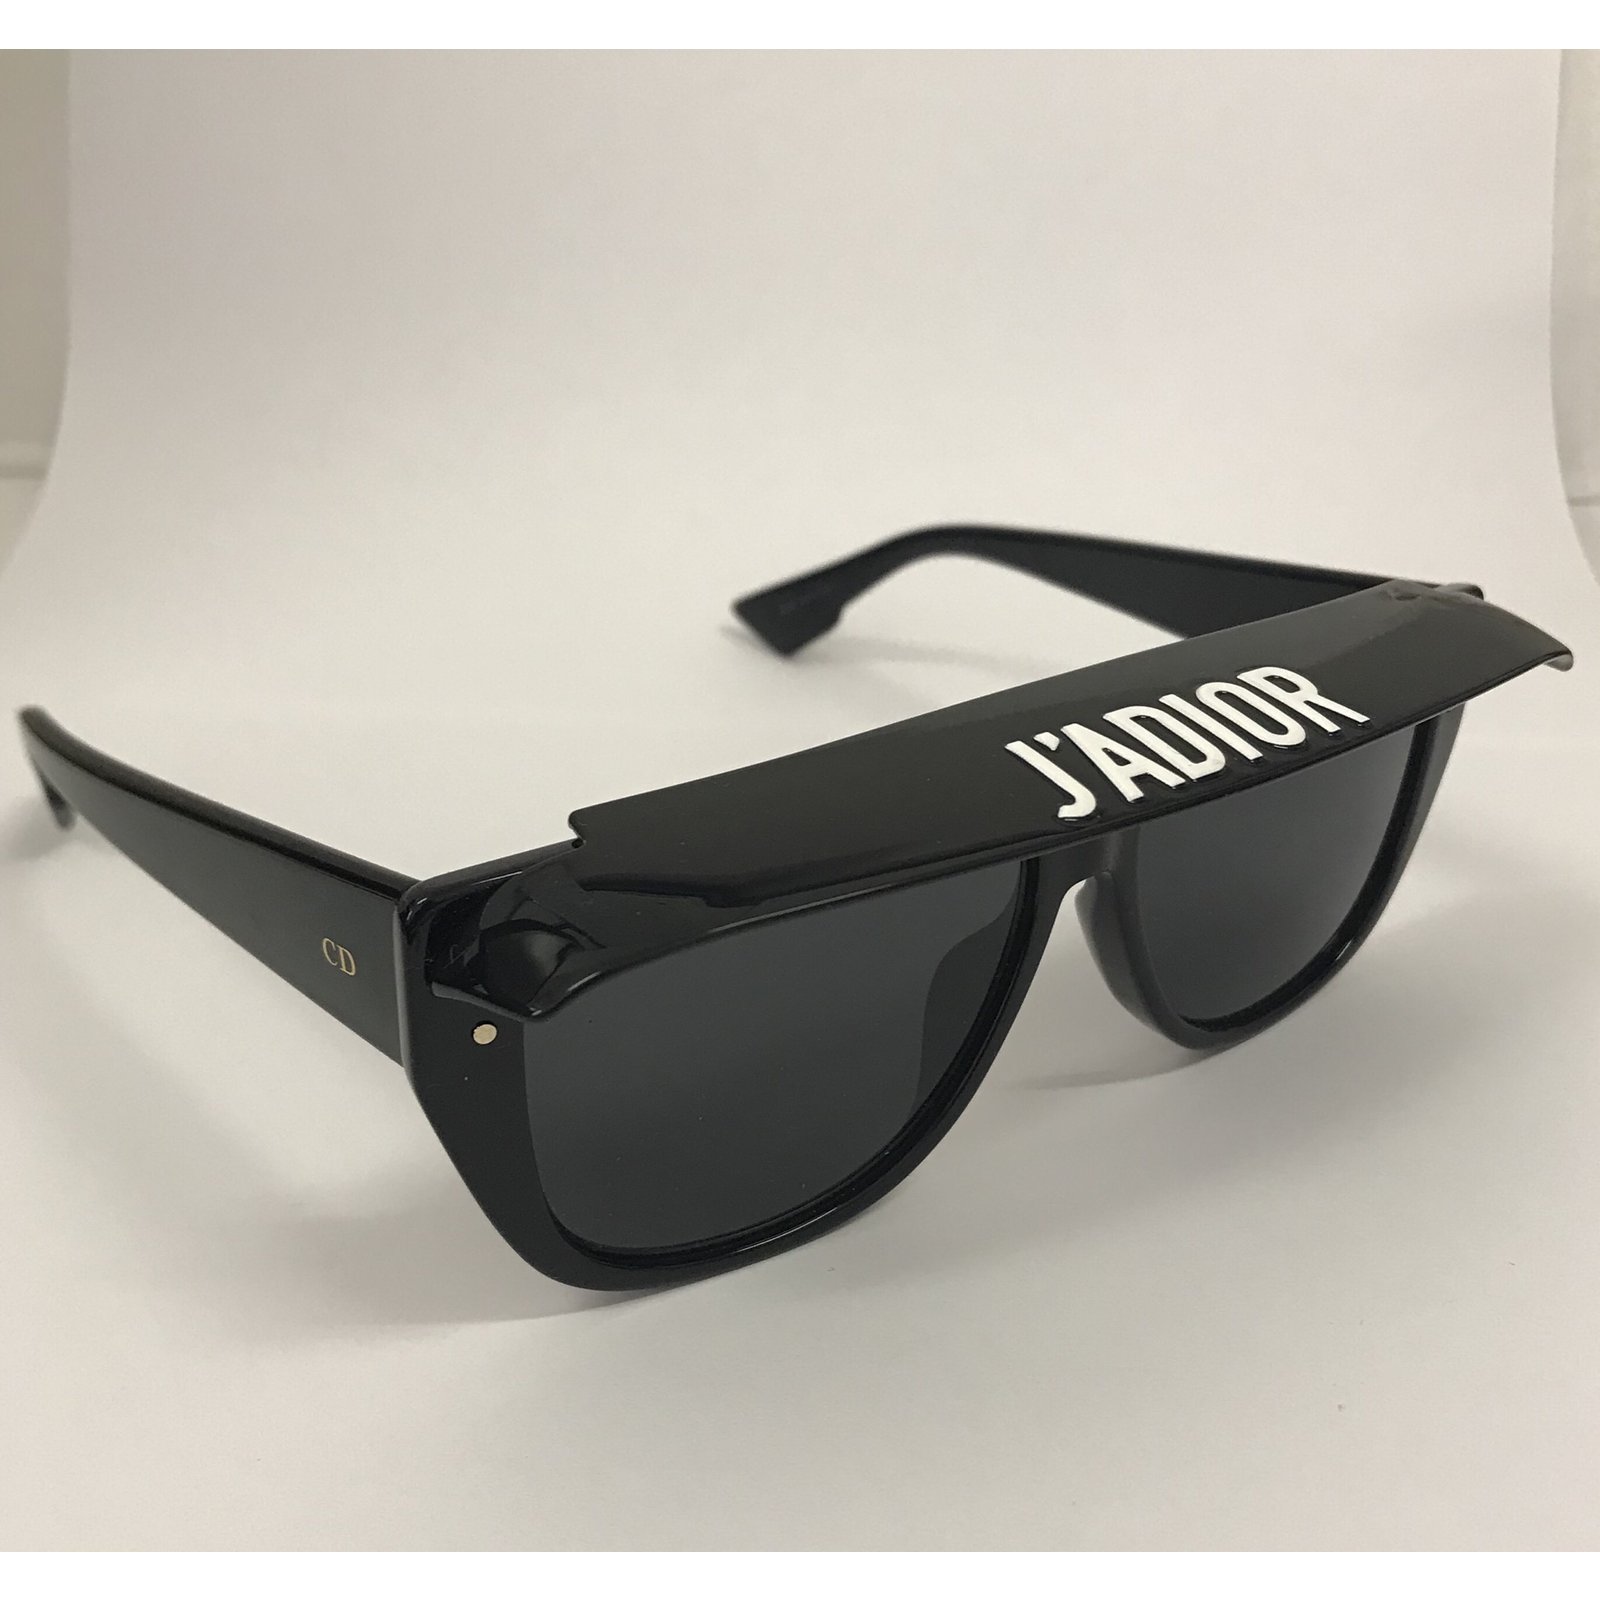 dior club 2 sunglasses price